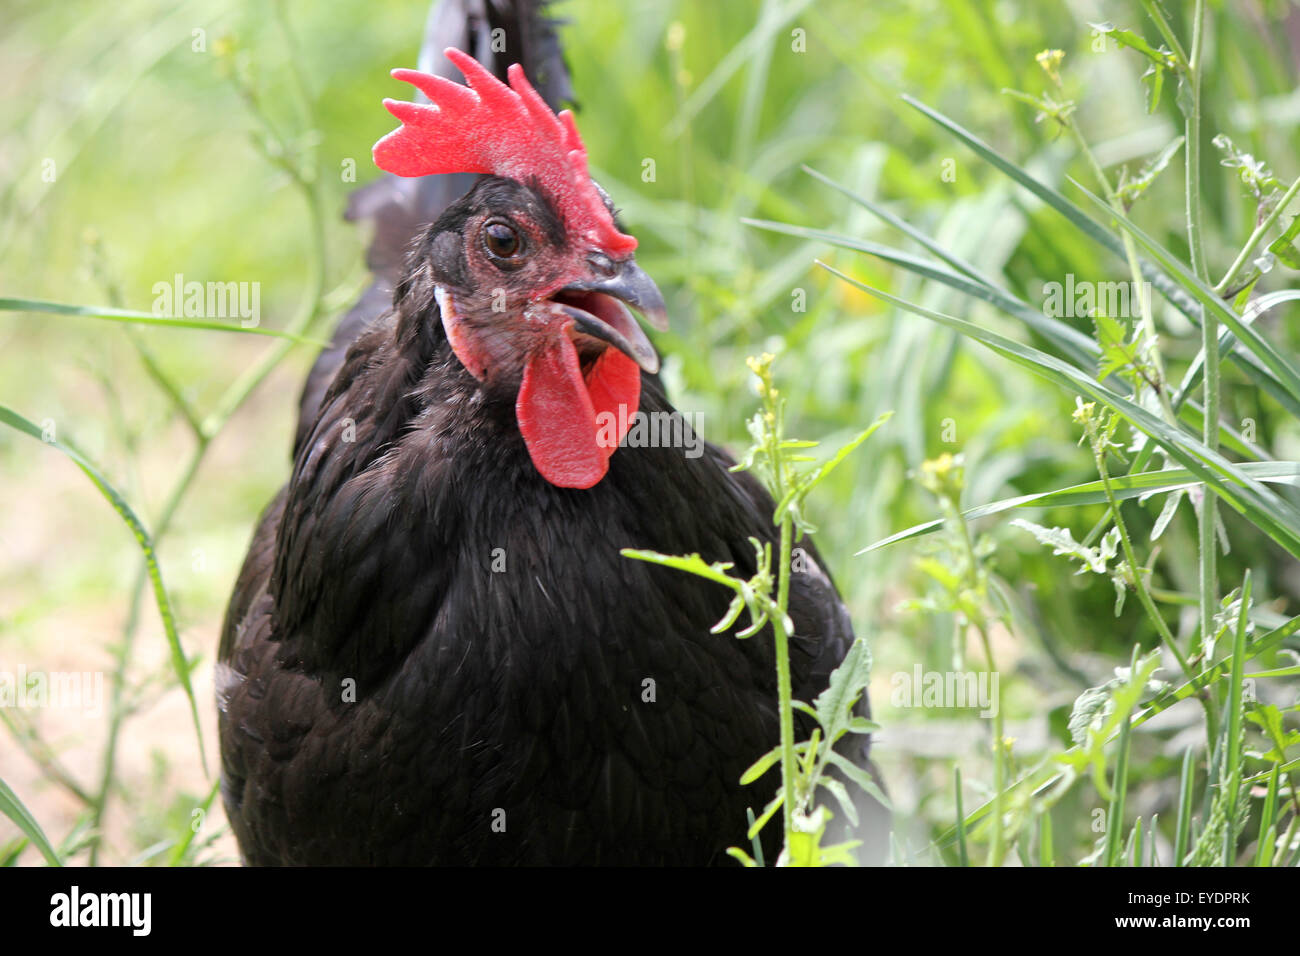 A black free range hen walking around in a farmyard, clucking Stock Photo